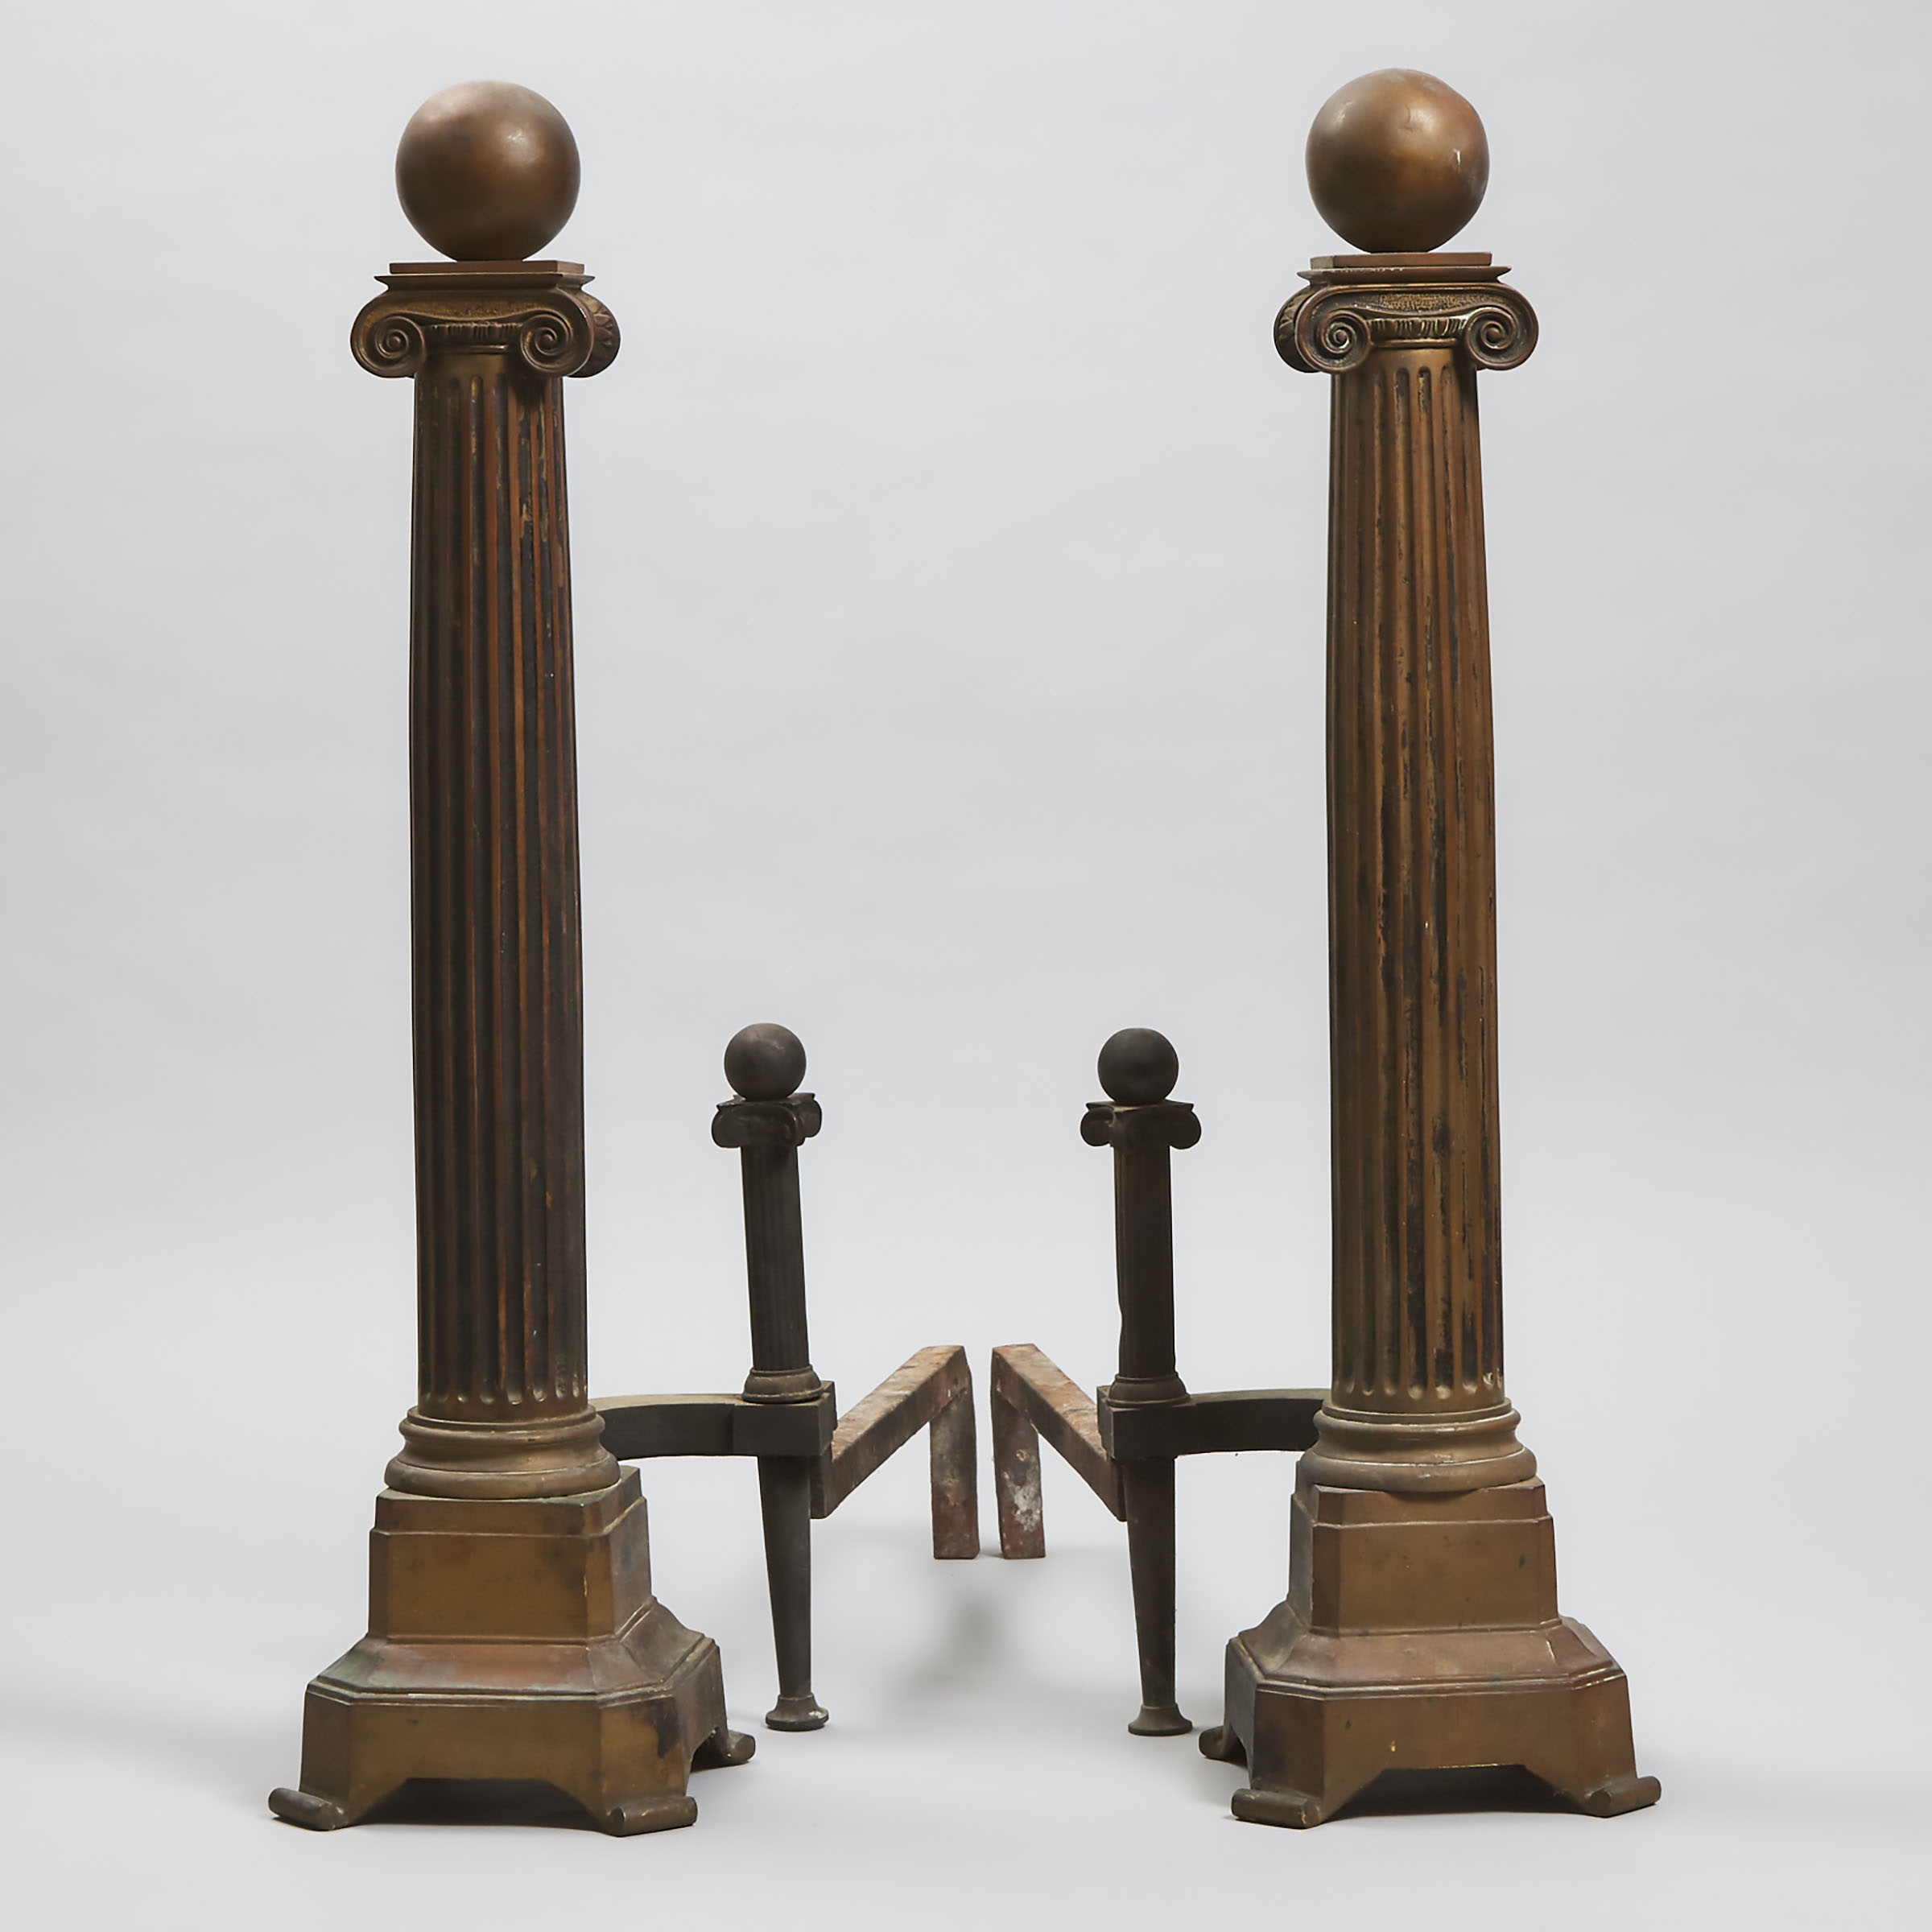 Large Pair of Patinated Bronze Doric Column Form Andirons, 19th century